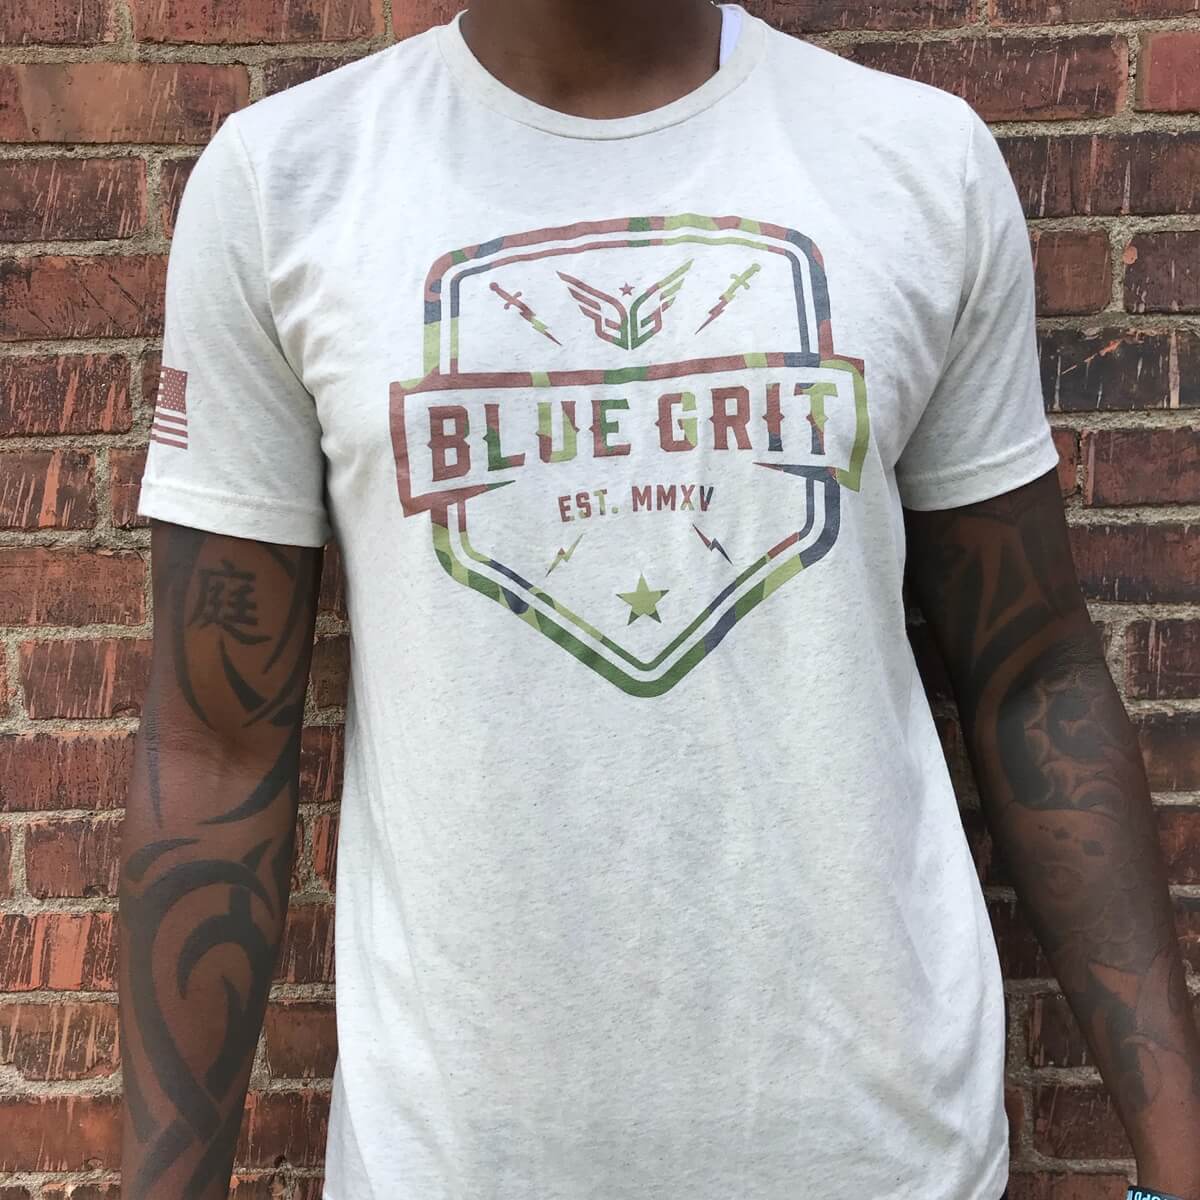 "Angel Of The Night” T-Shirt - Oatmeal tri-blend - Blue Grit